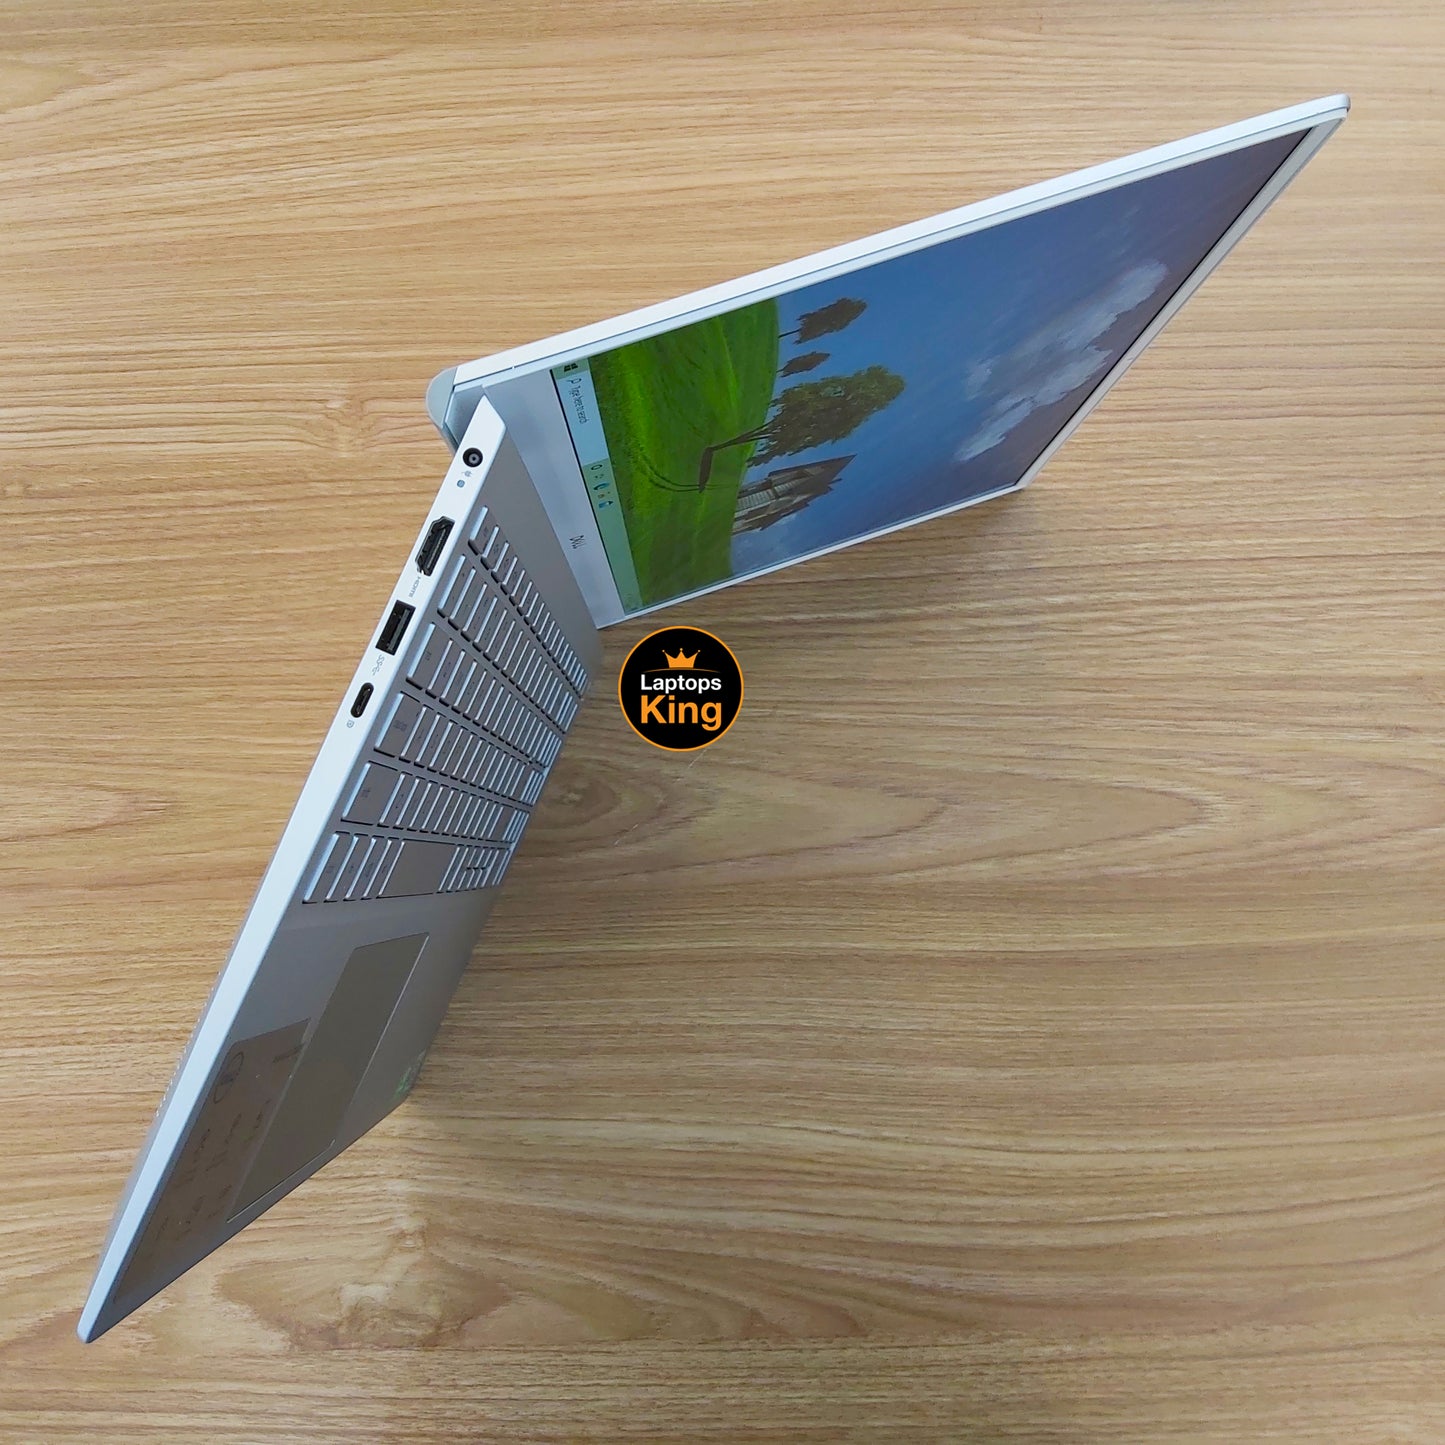 Dell Inspiron 15 5501 i7-1065g7 Mx330 Laptop (New Open Box)